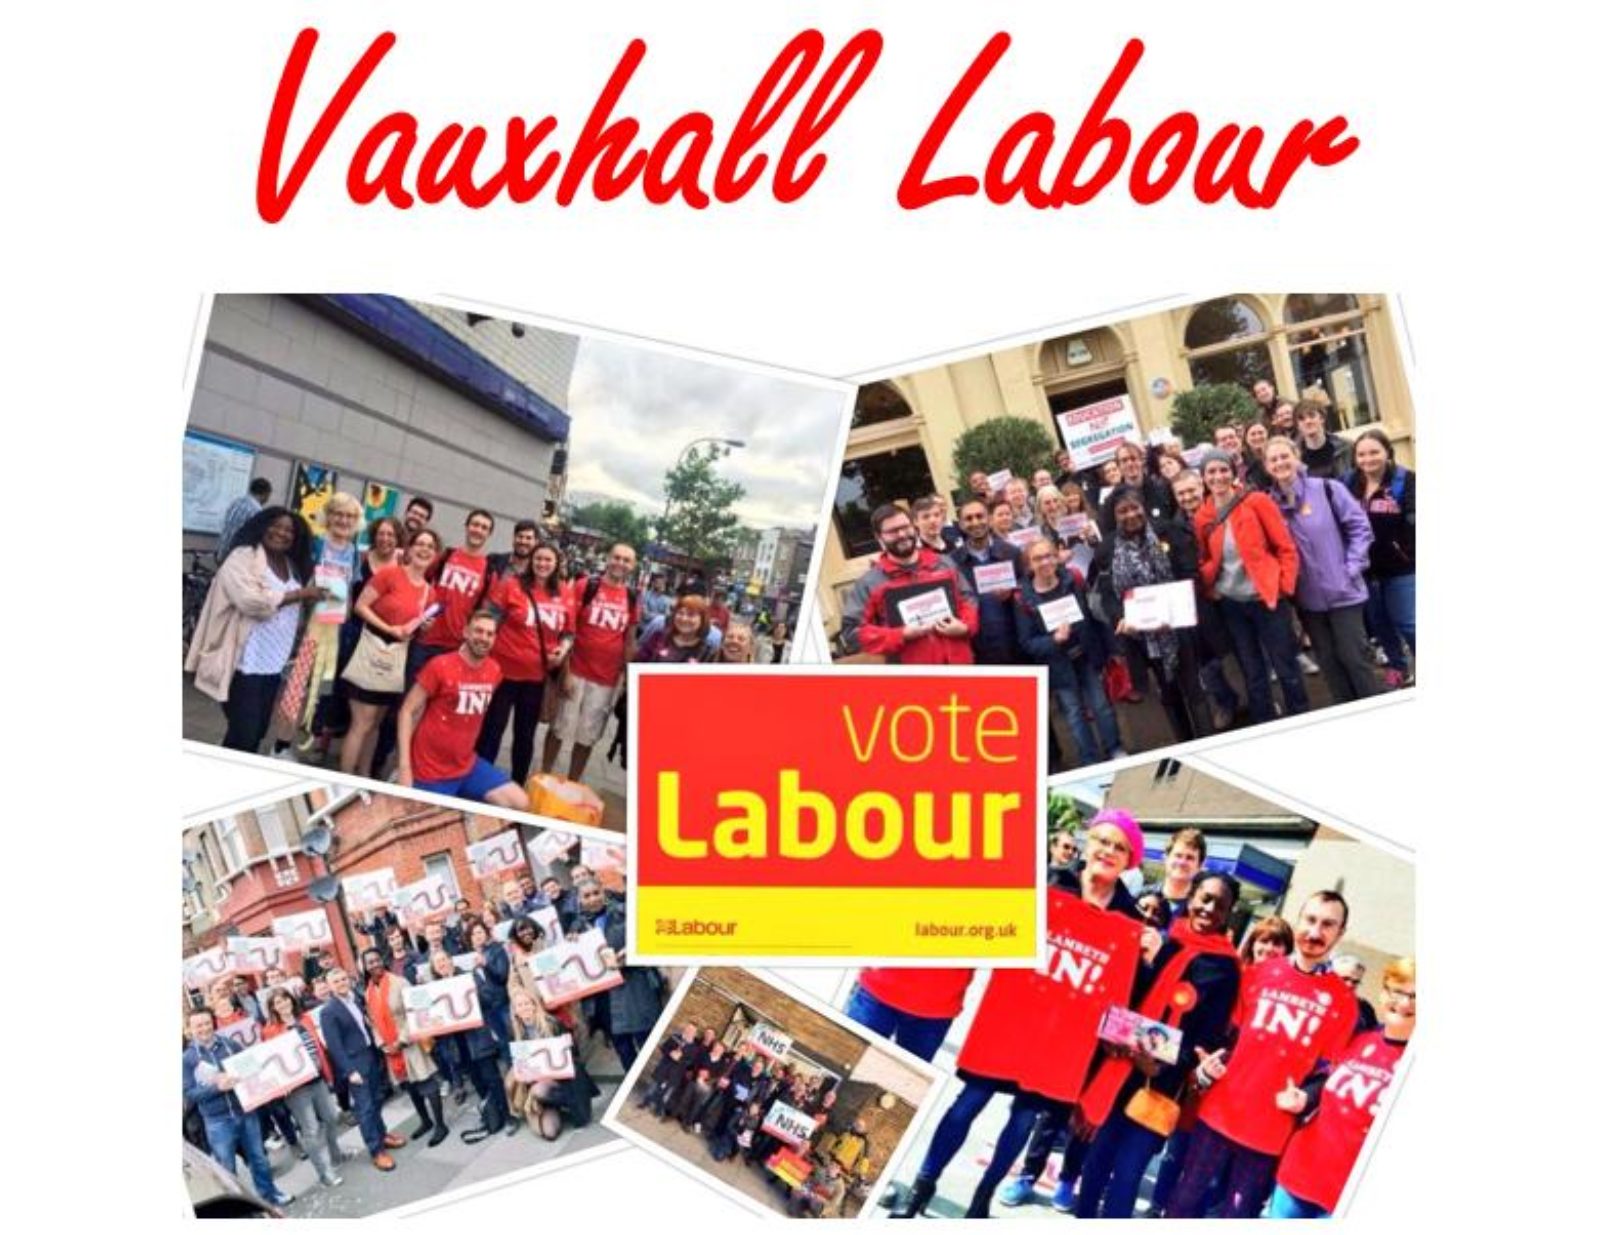 Vauxhall Labour